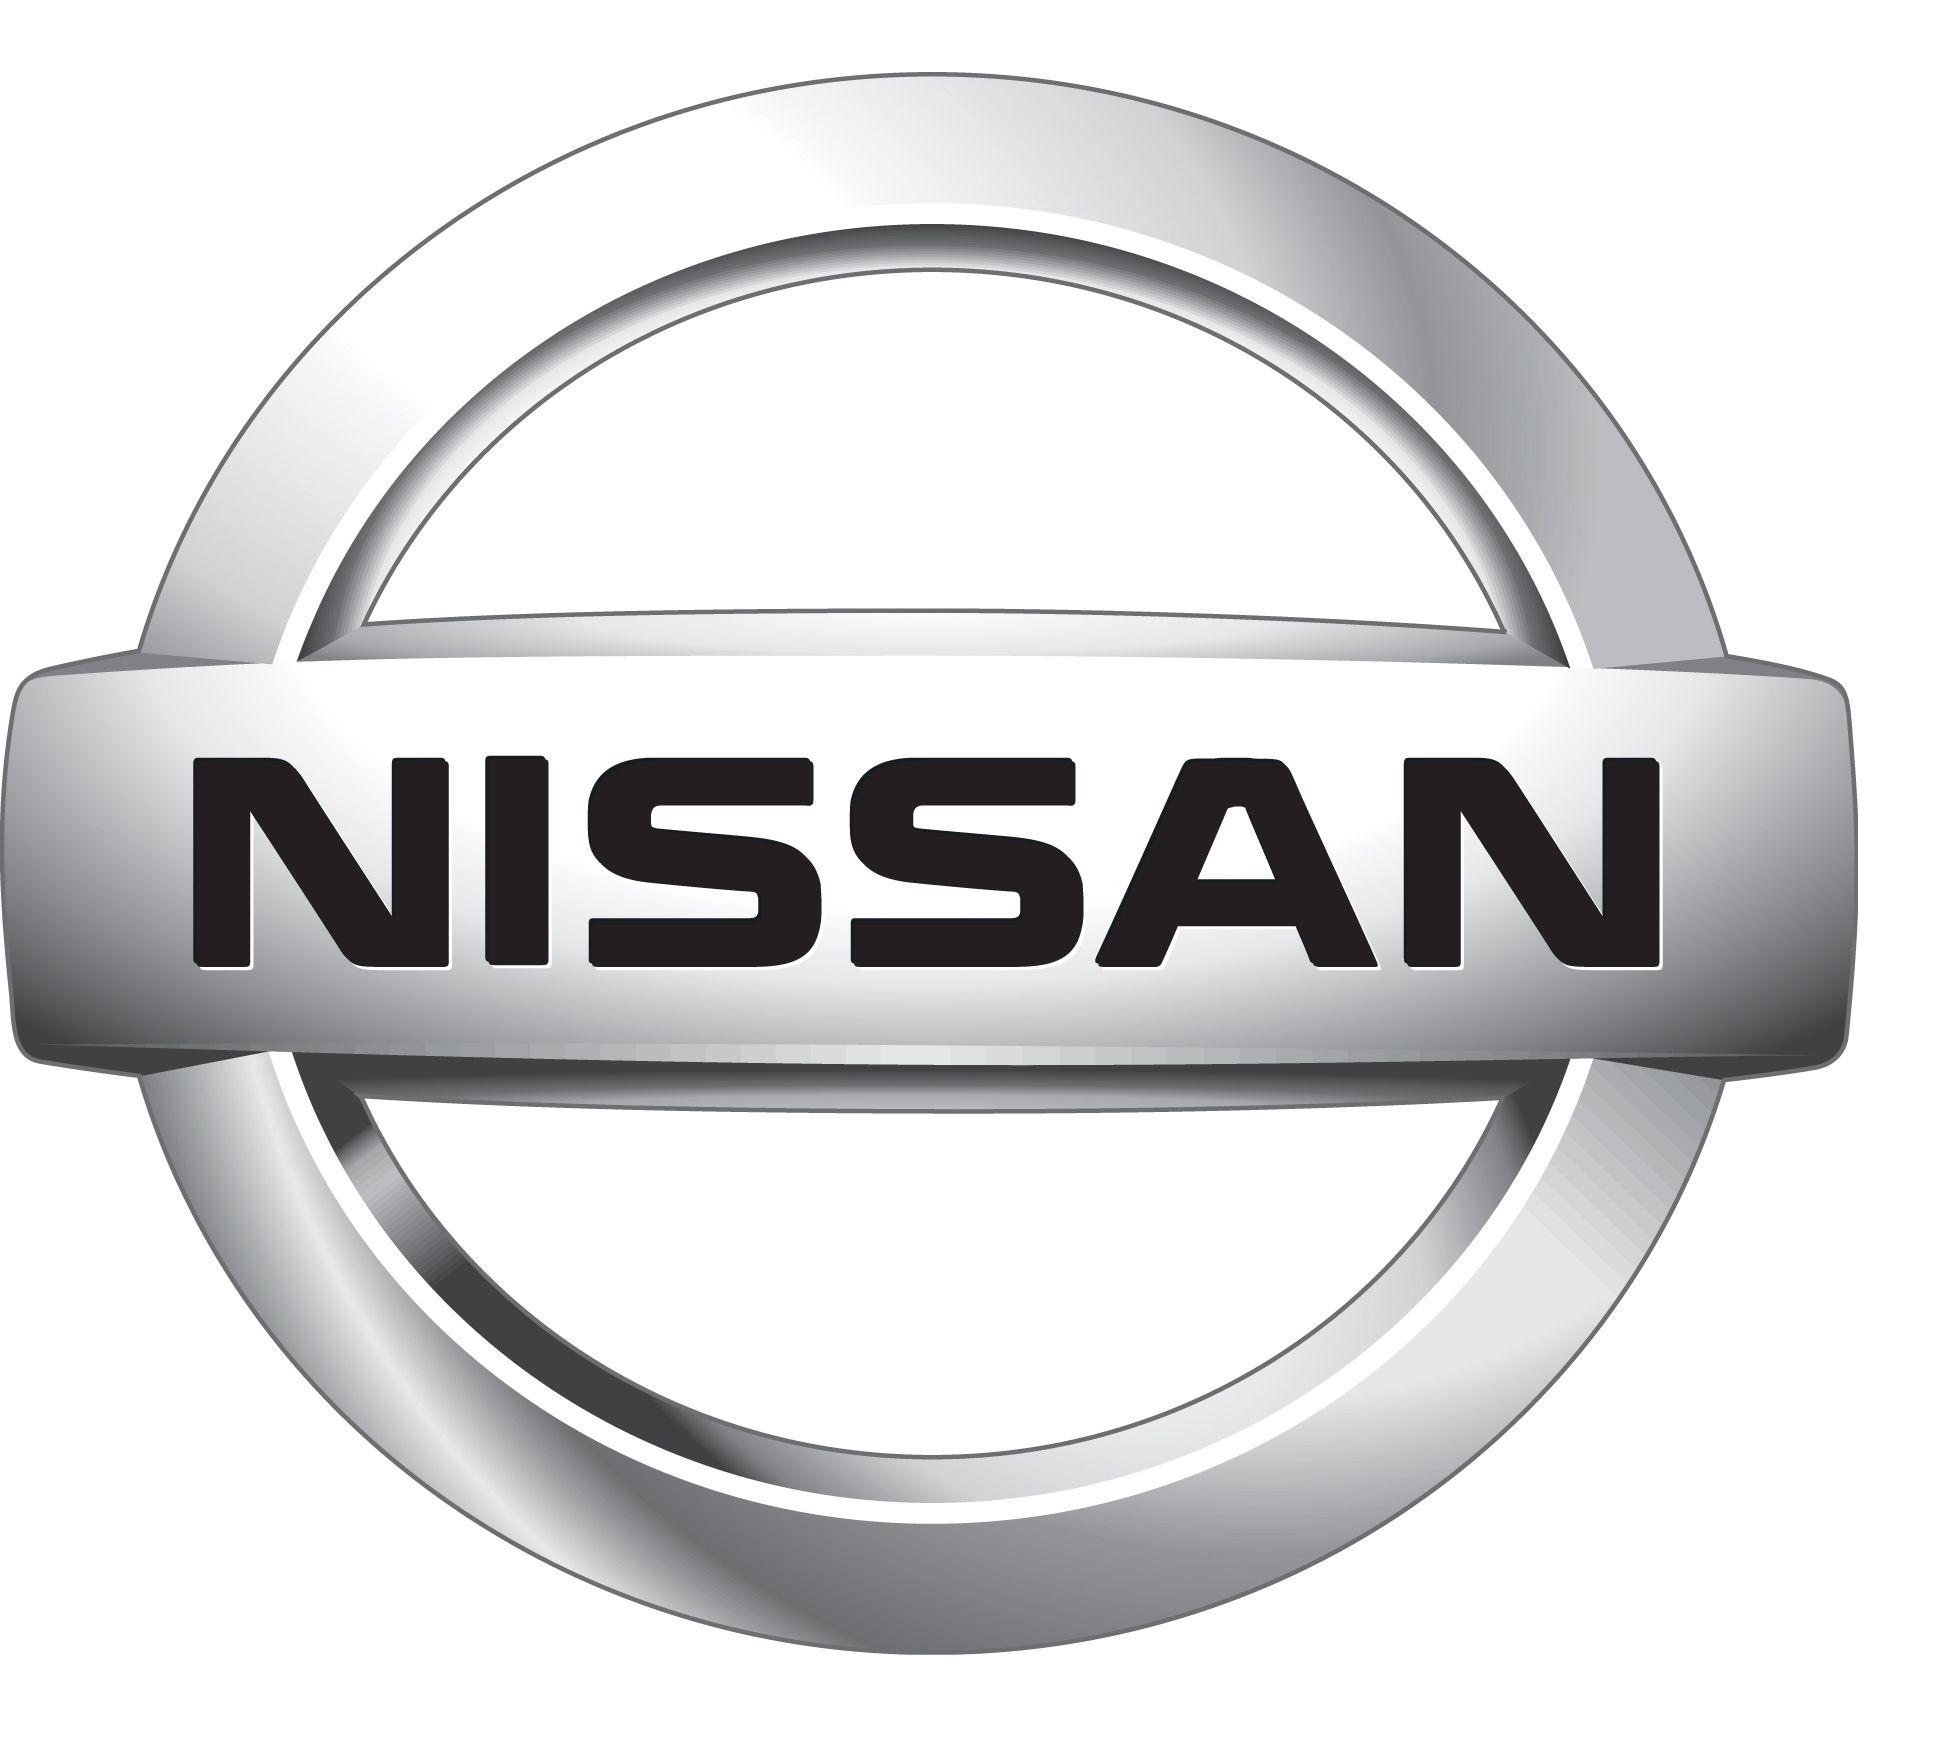 Nissen Logo - Nissan Logo, Nissan Car Symbol Meaning and History | Car Brand Names.com